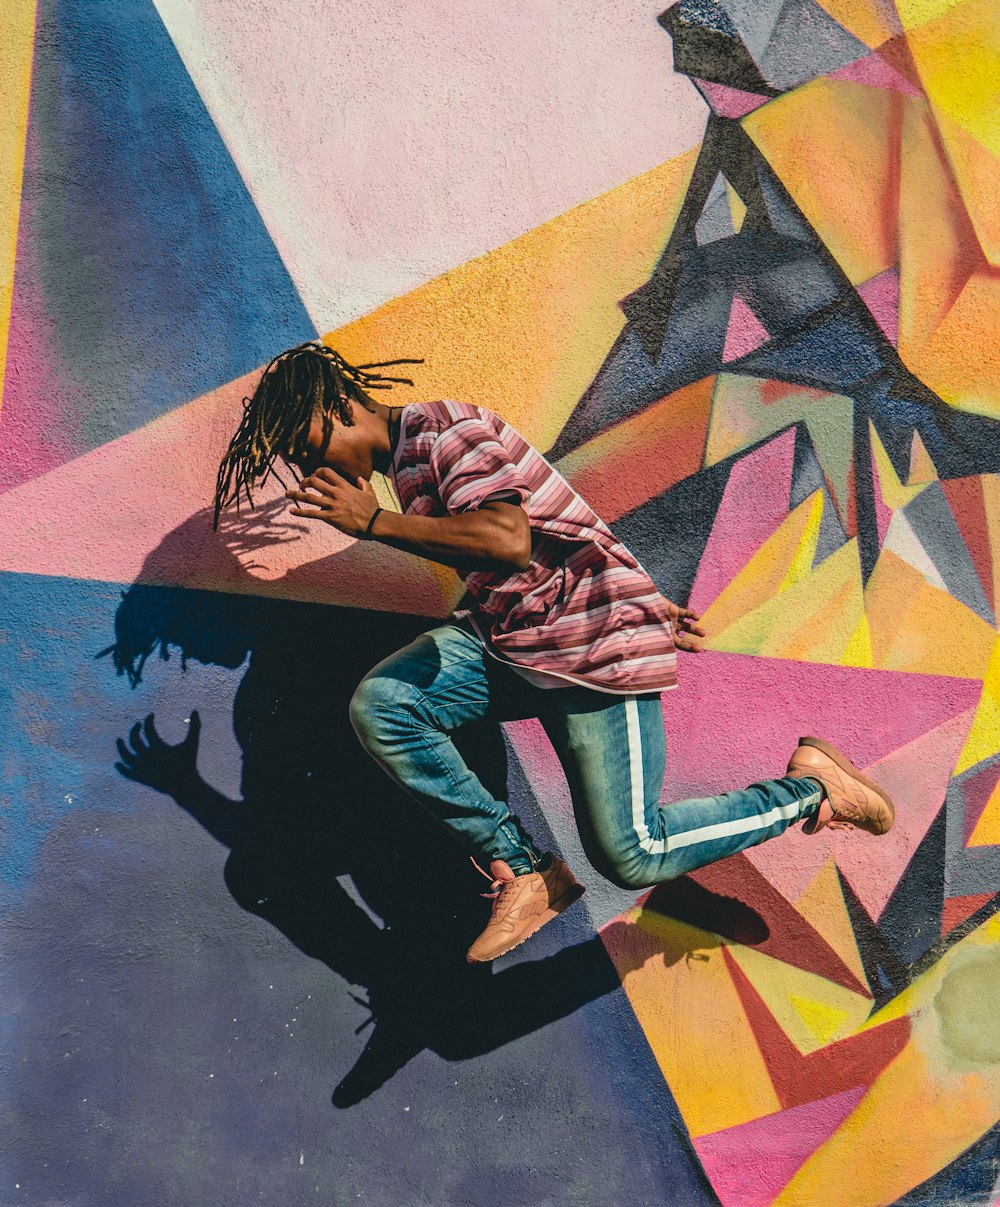 Mann springt neben mehrfarbiger Wand